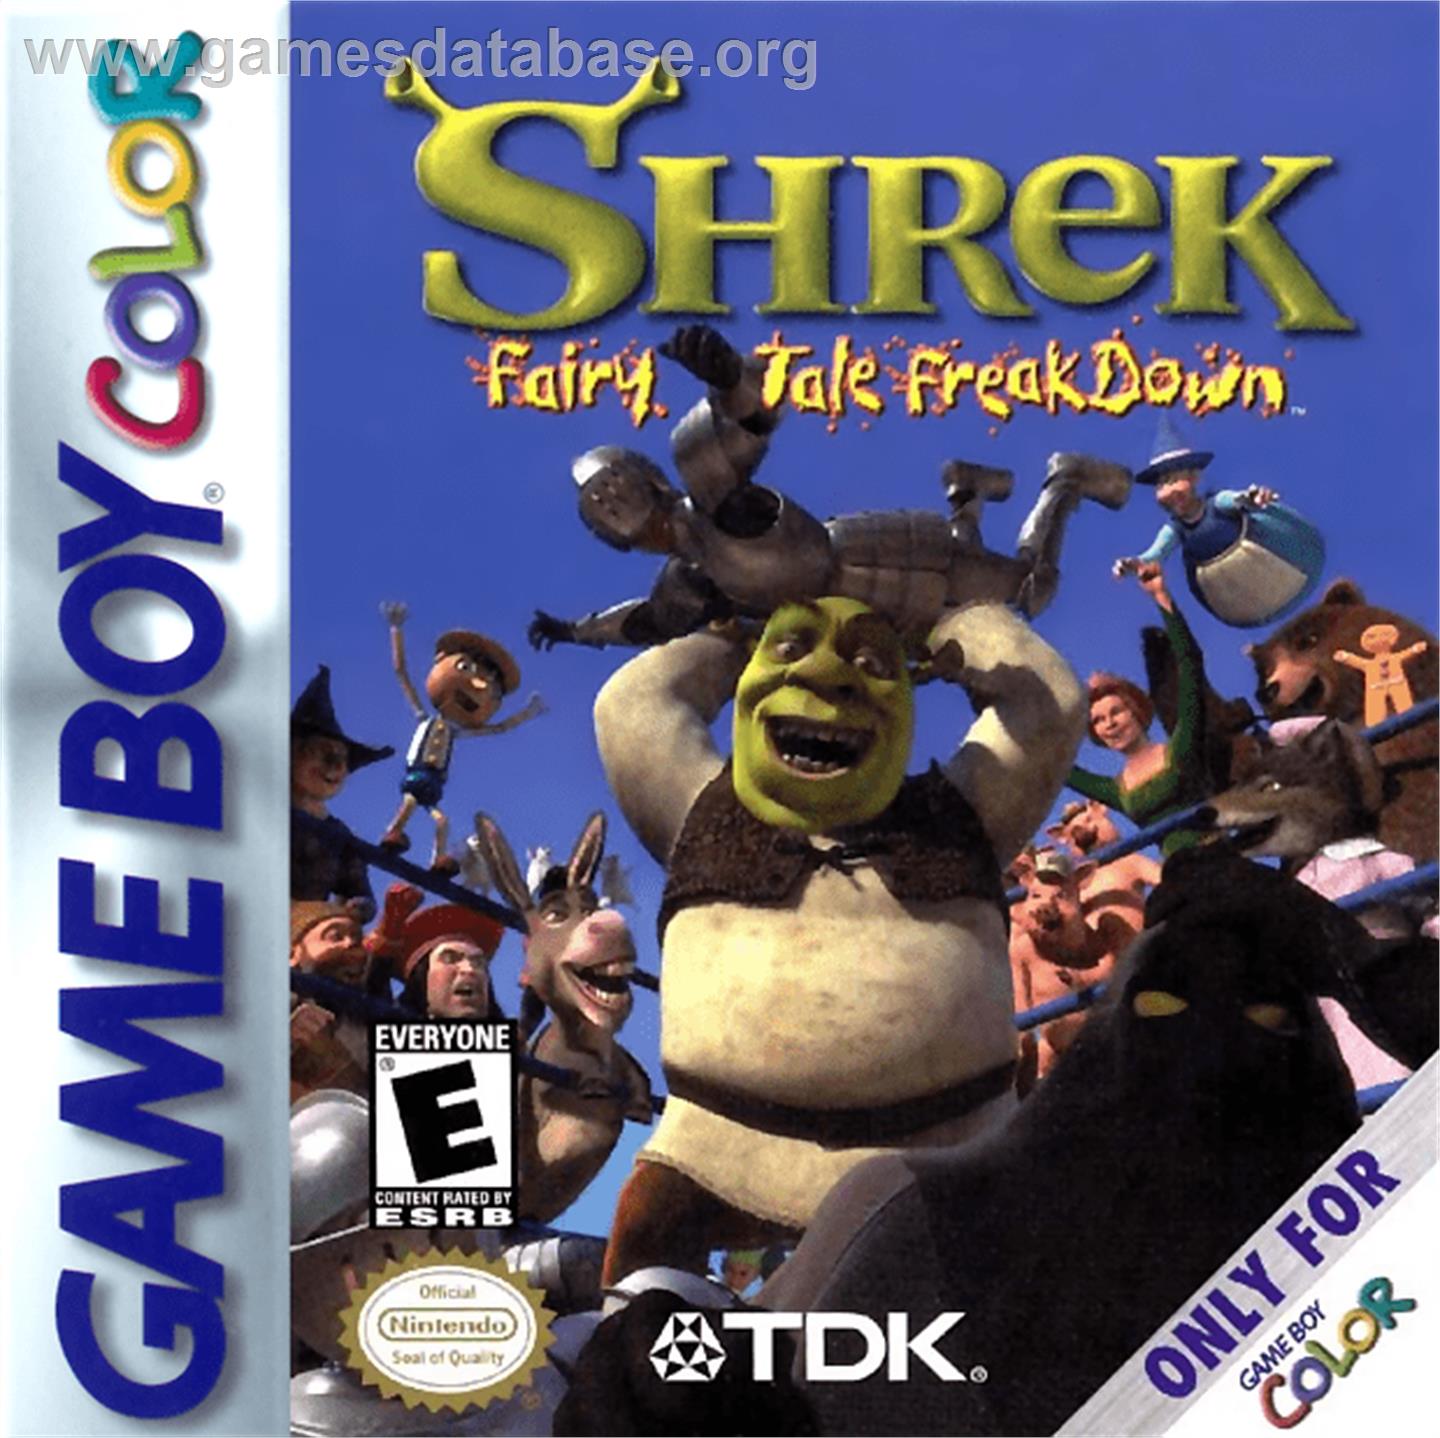 Shrek: Fairy Tale Freakdown - Nintendo Game Boy Color - Artwork - Box